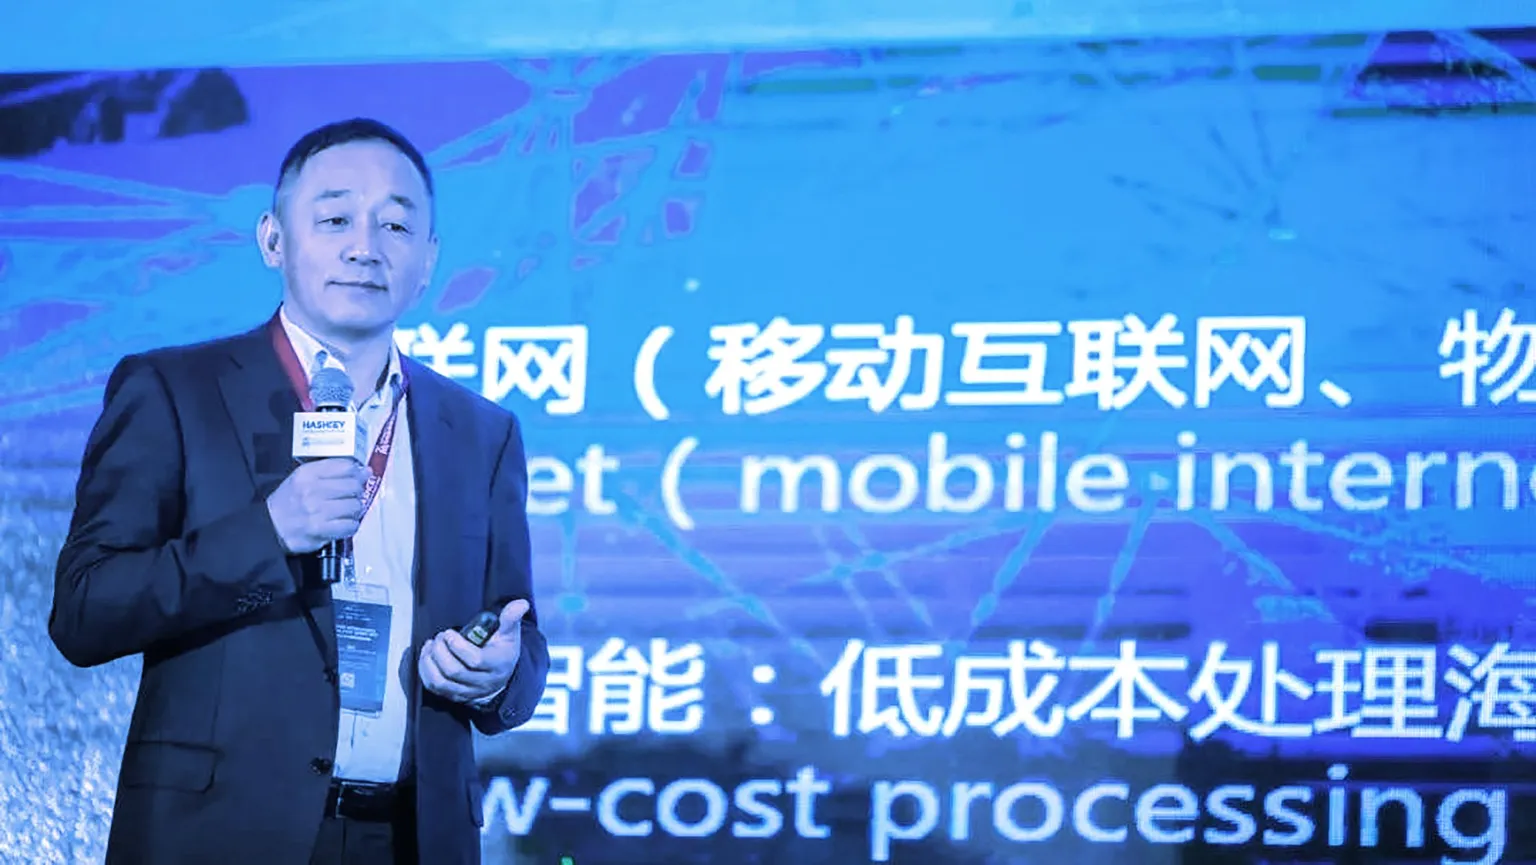 Dr. Xiao Feng. Image: HashKey Capital